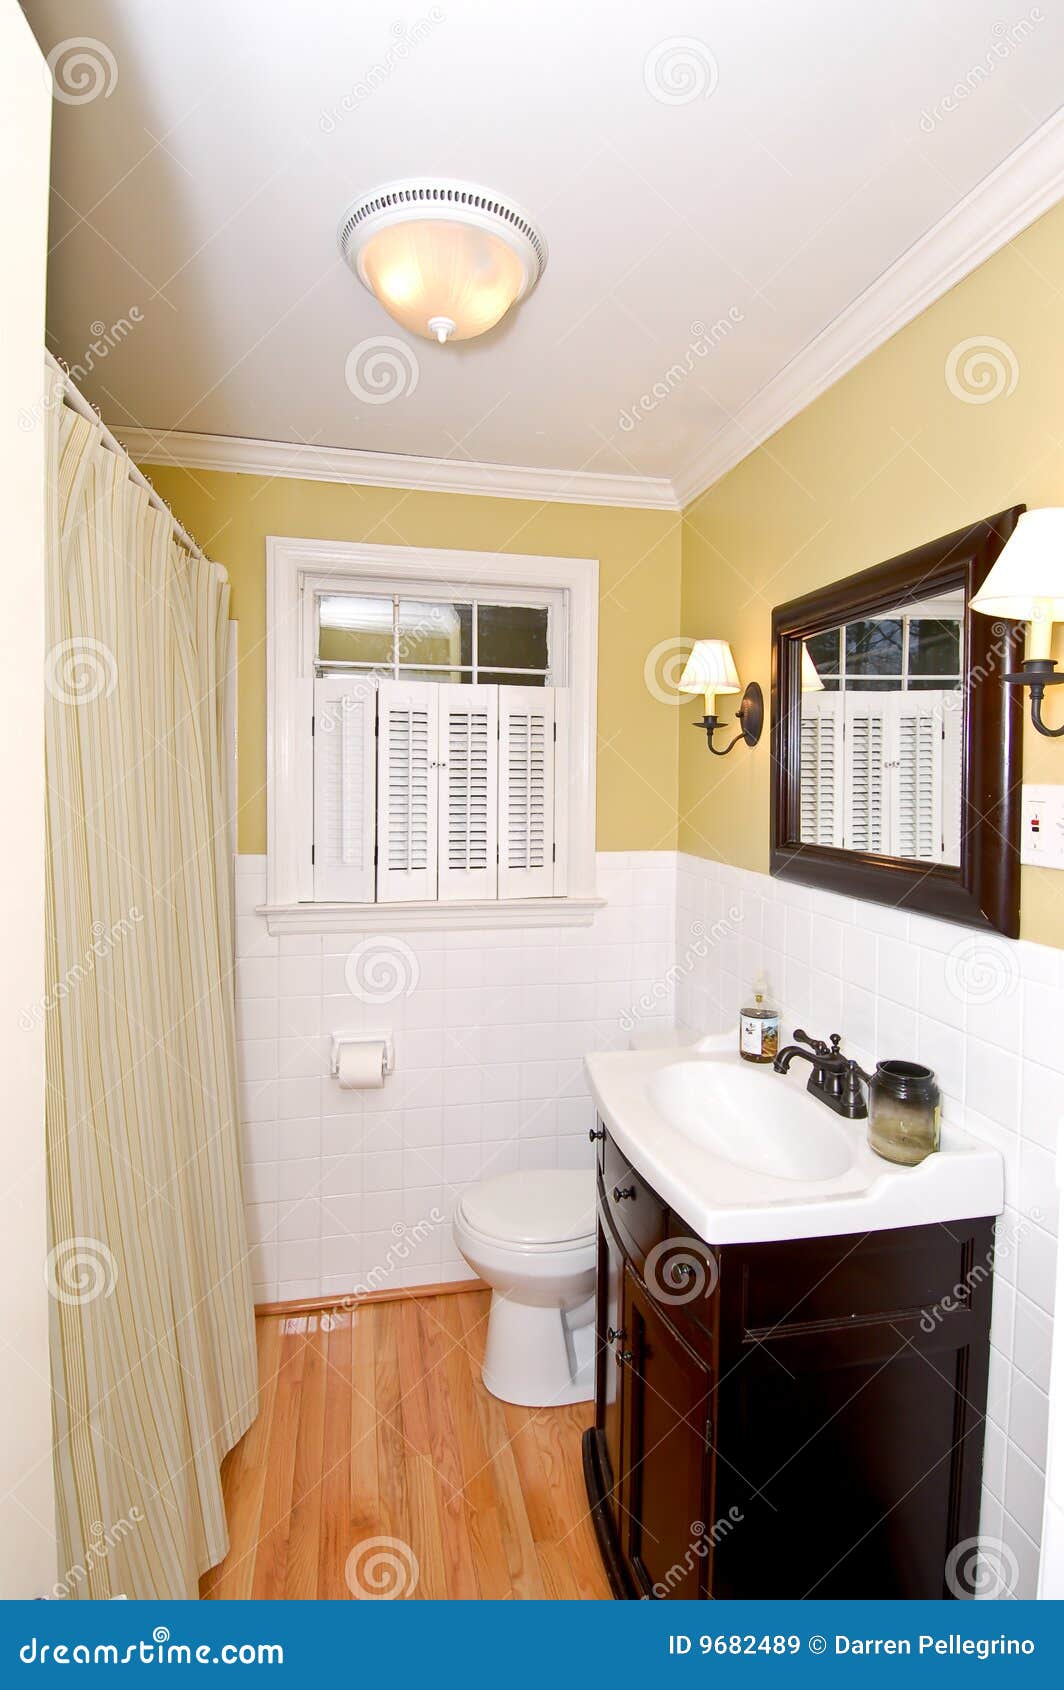 Decorative Bathroom. Decorative New England Style Bathroom